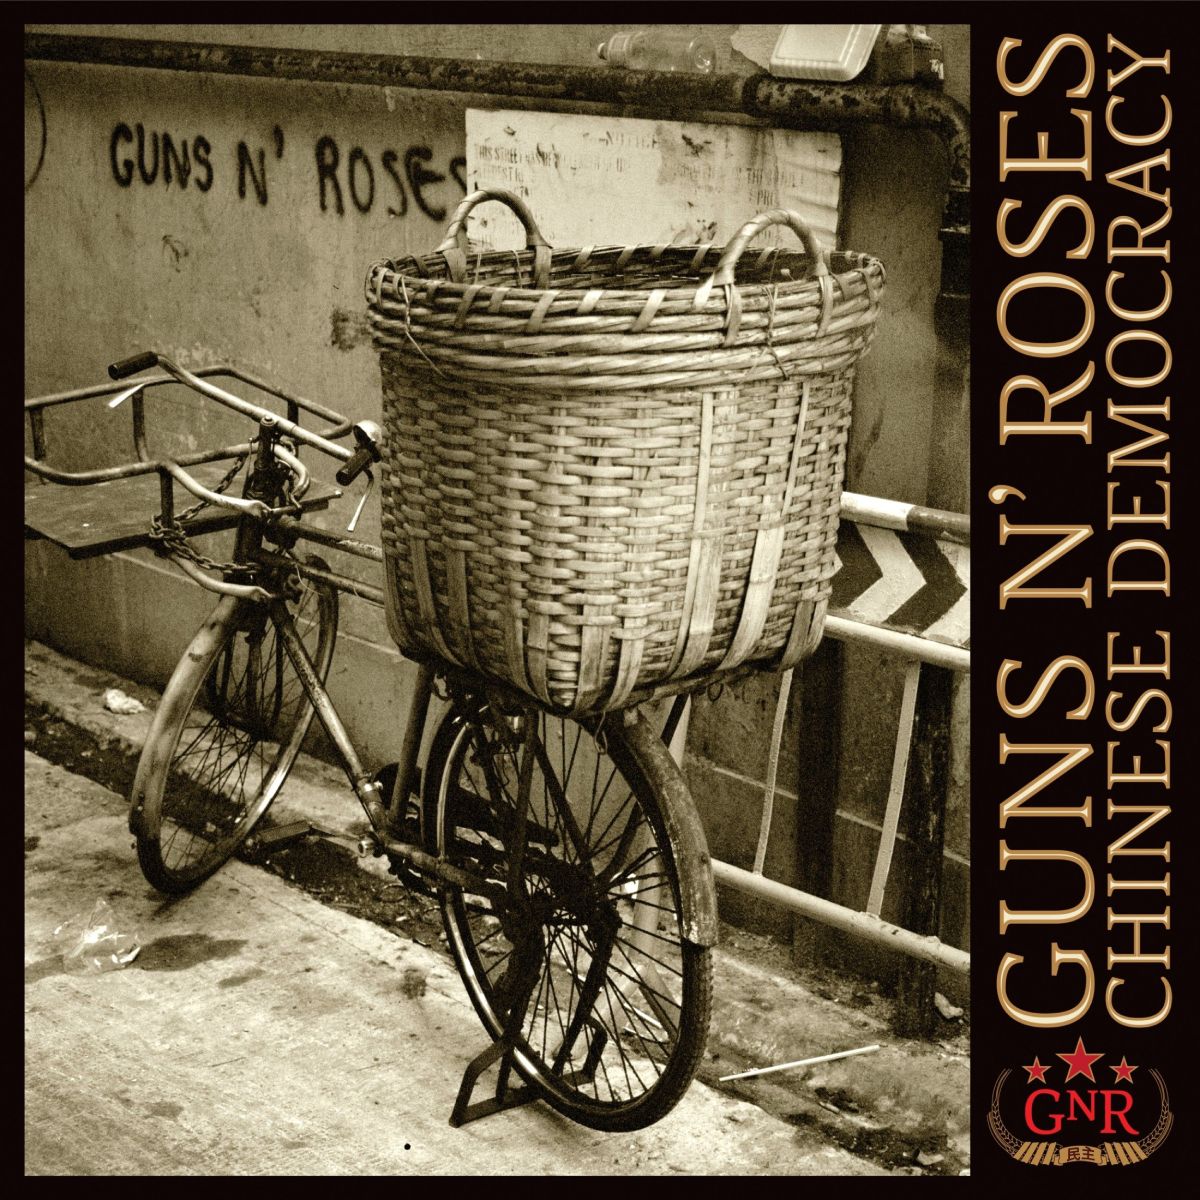 Guns N' Roses, album " Chinese Democracy ".